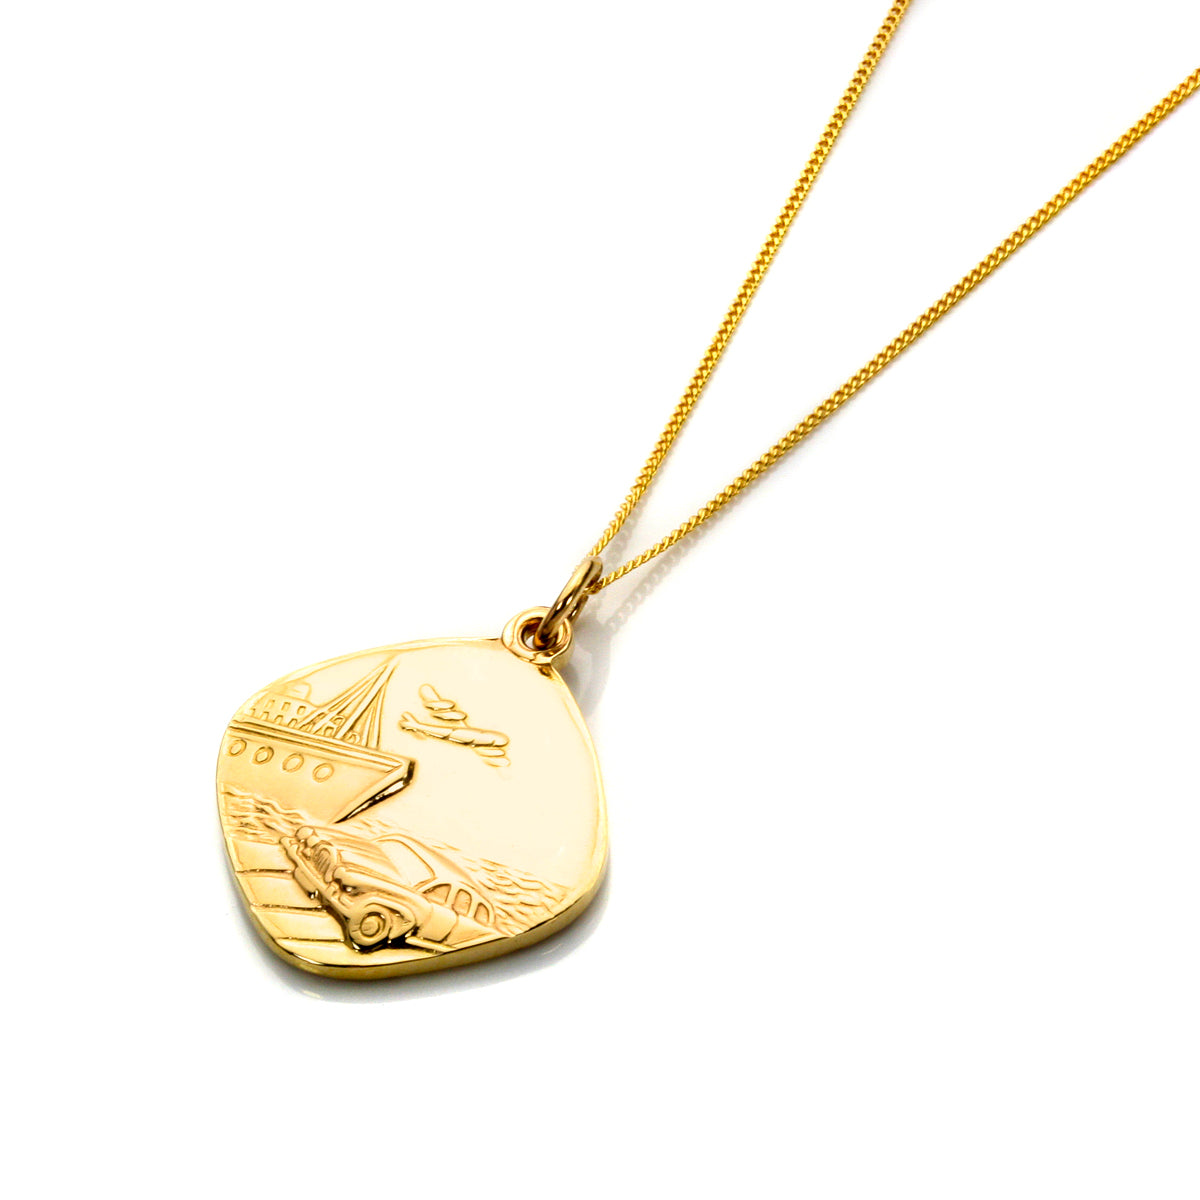 9ct Gold Medium Reversible Saint Christopher Pendant Necklace 16 - 18 Inches